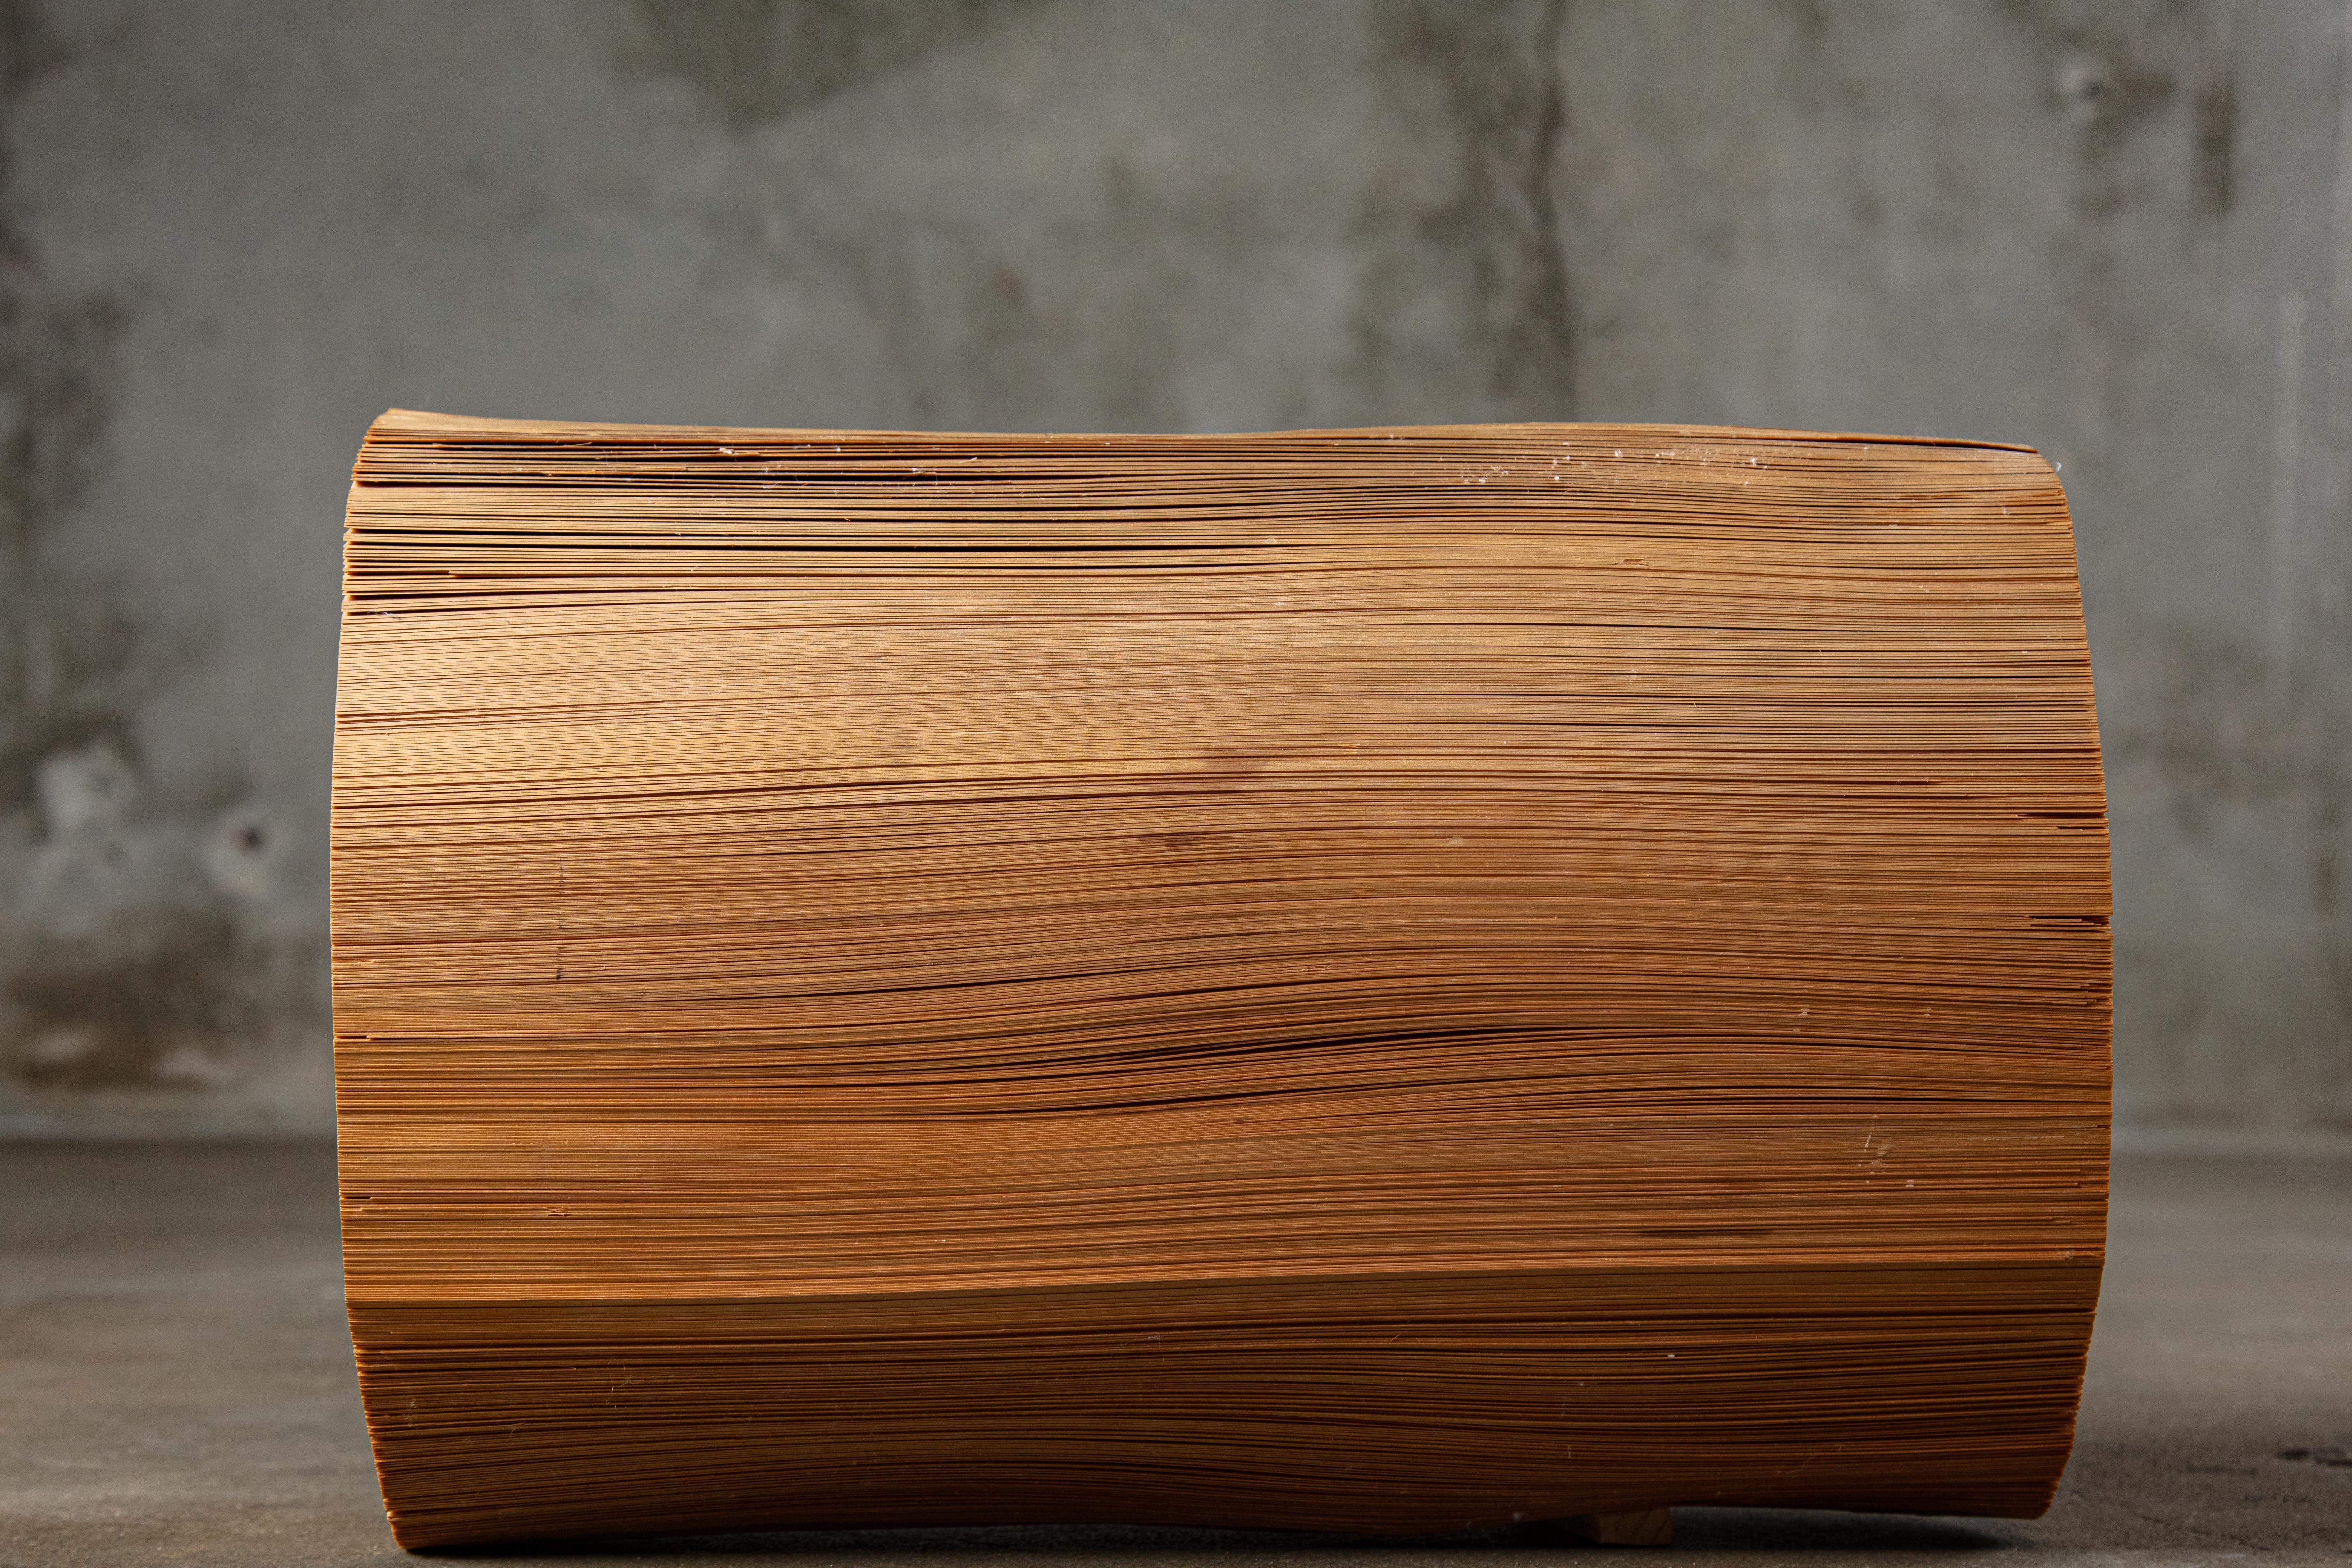 Late 20th Century Kazuo Kadonaga Peeled Wood Log 'Wood No. 5' For Sale